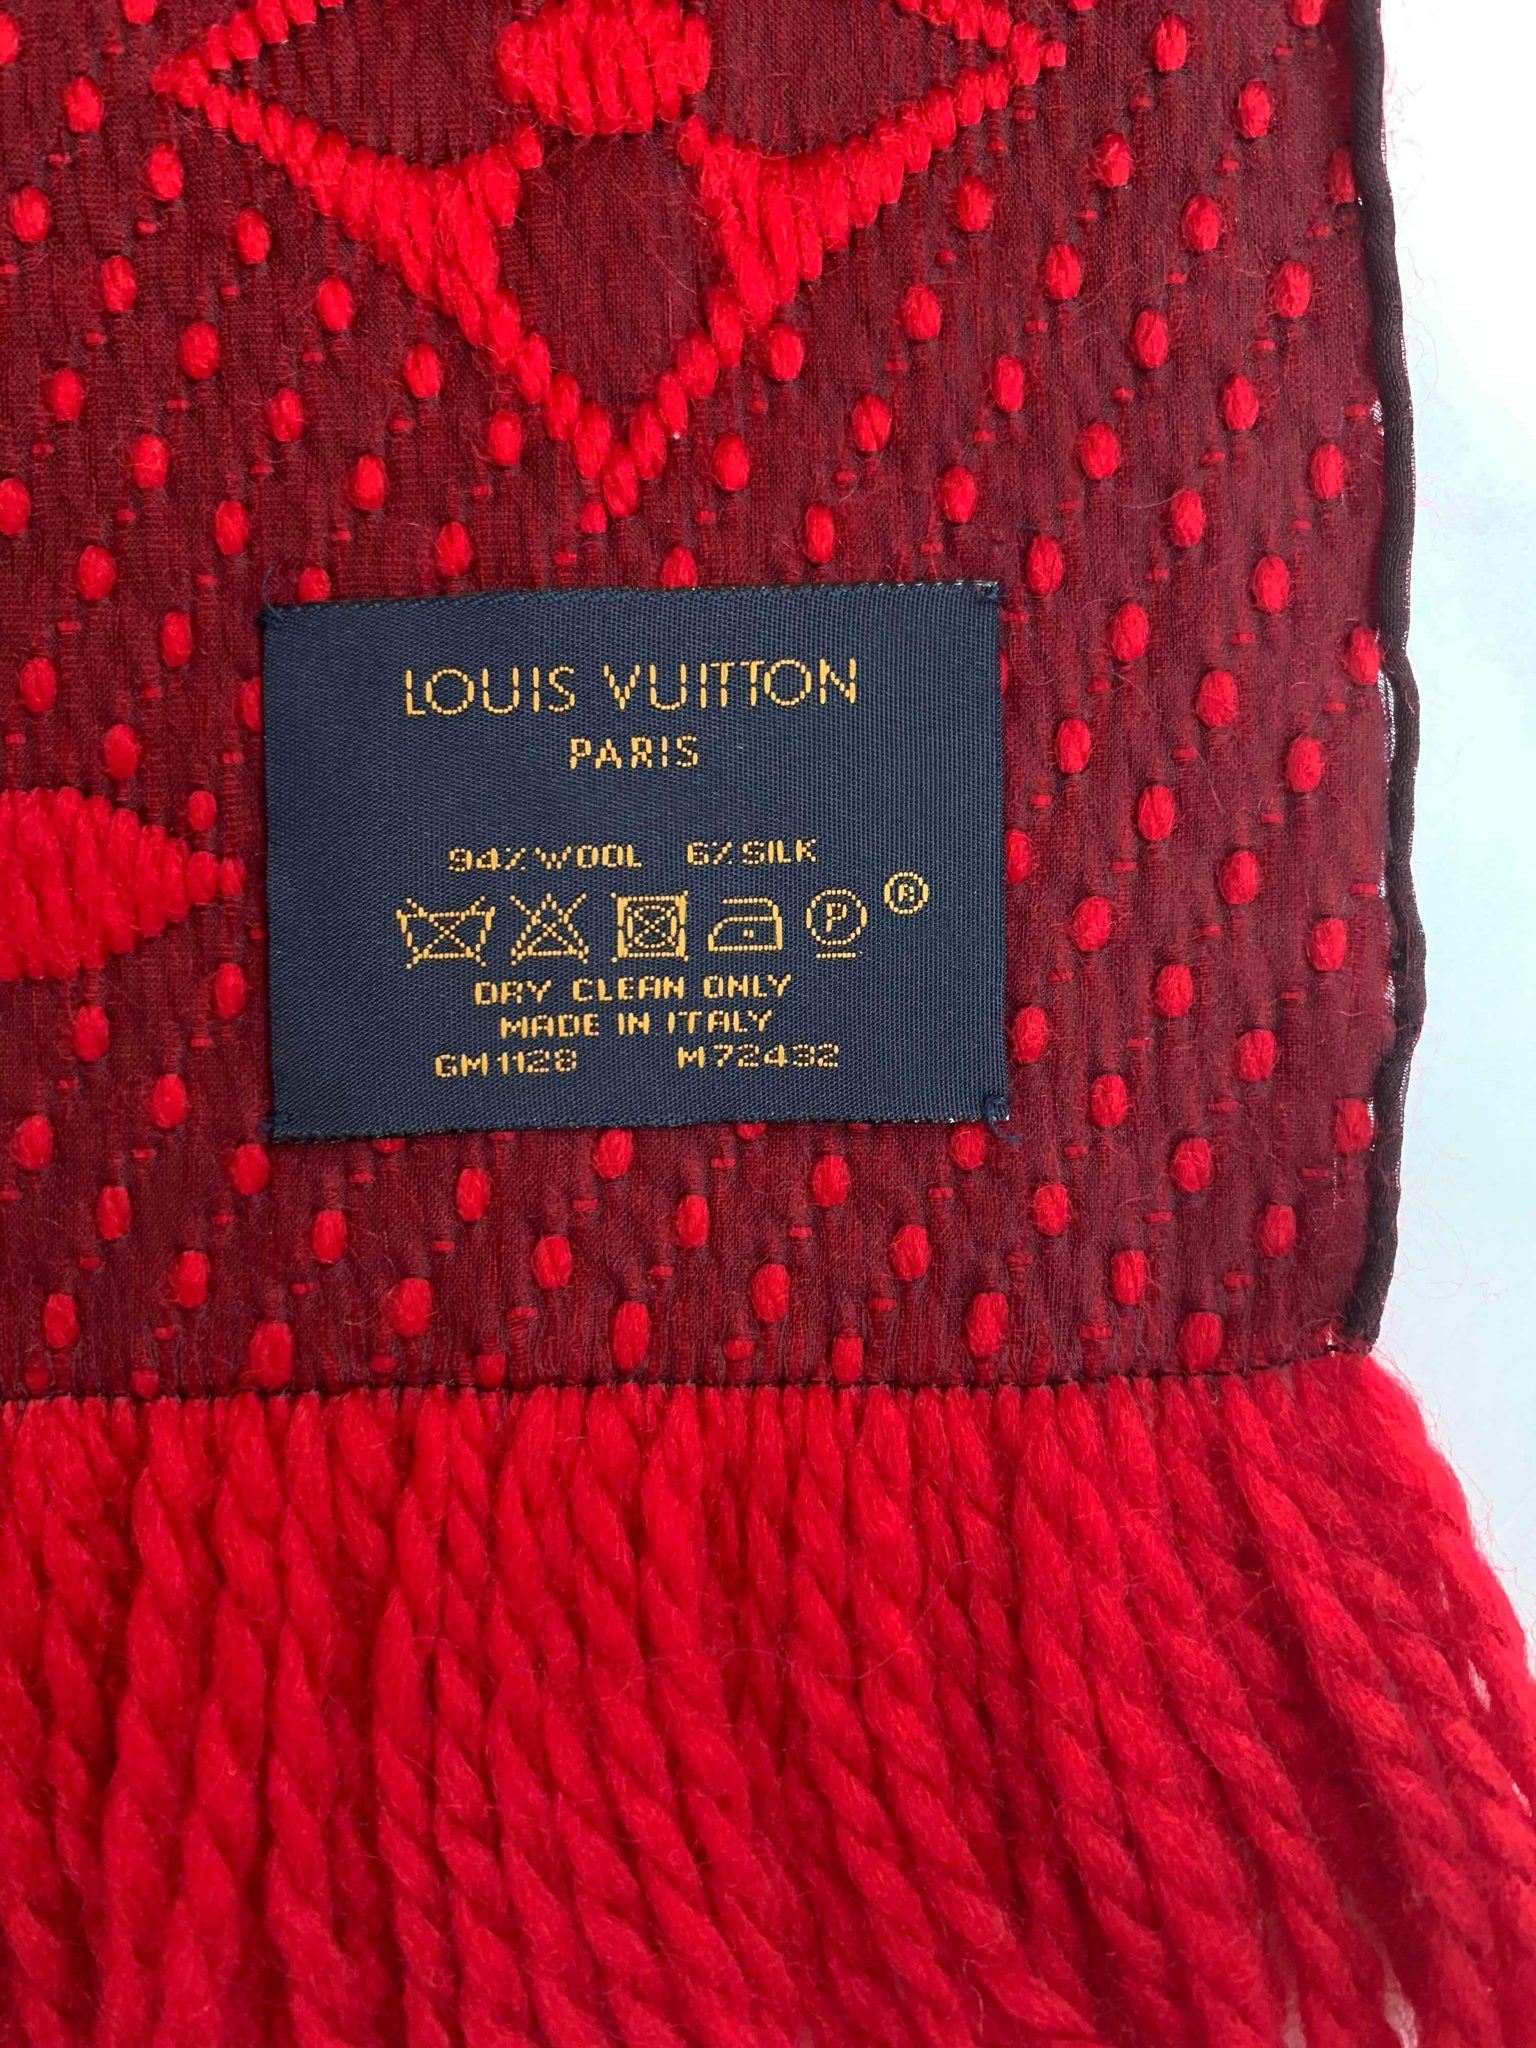 Julia Rose Boston - Louis Vuitton logomania in ruby. *$275 with